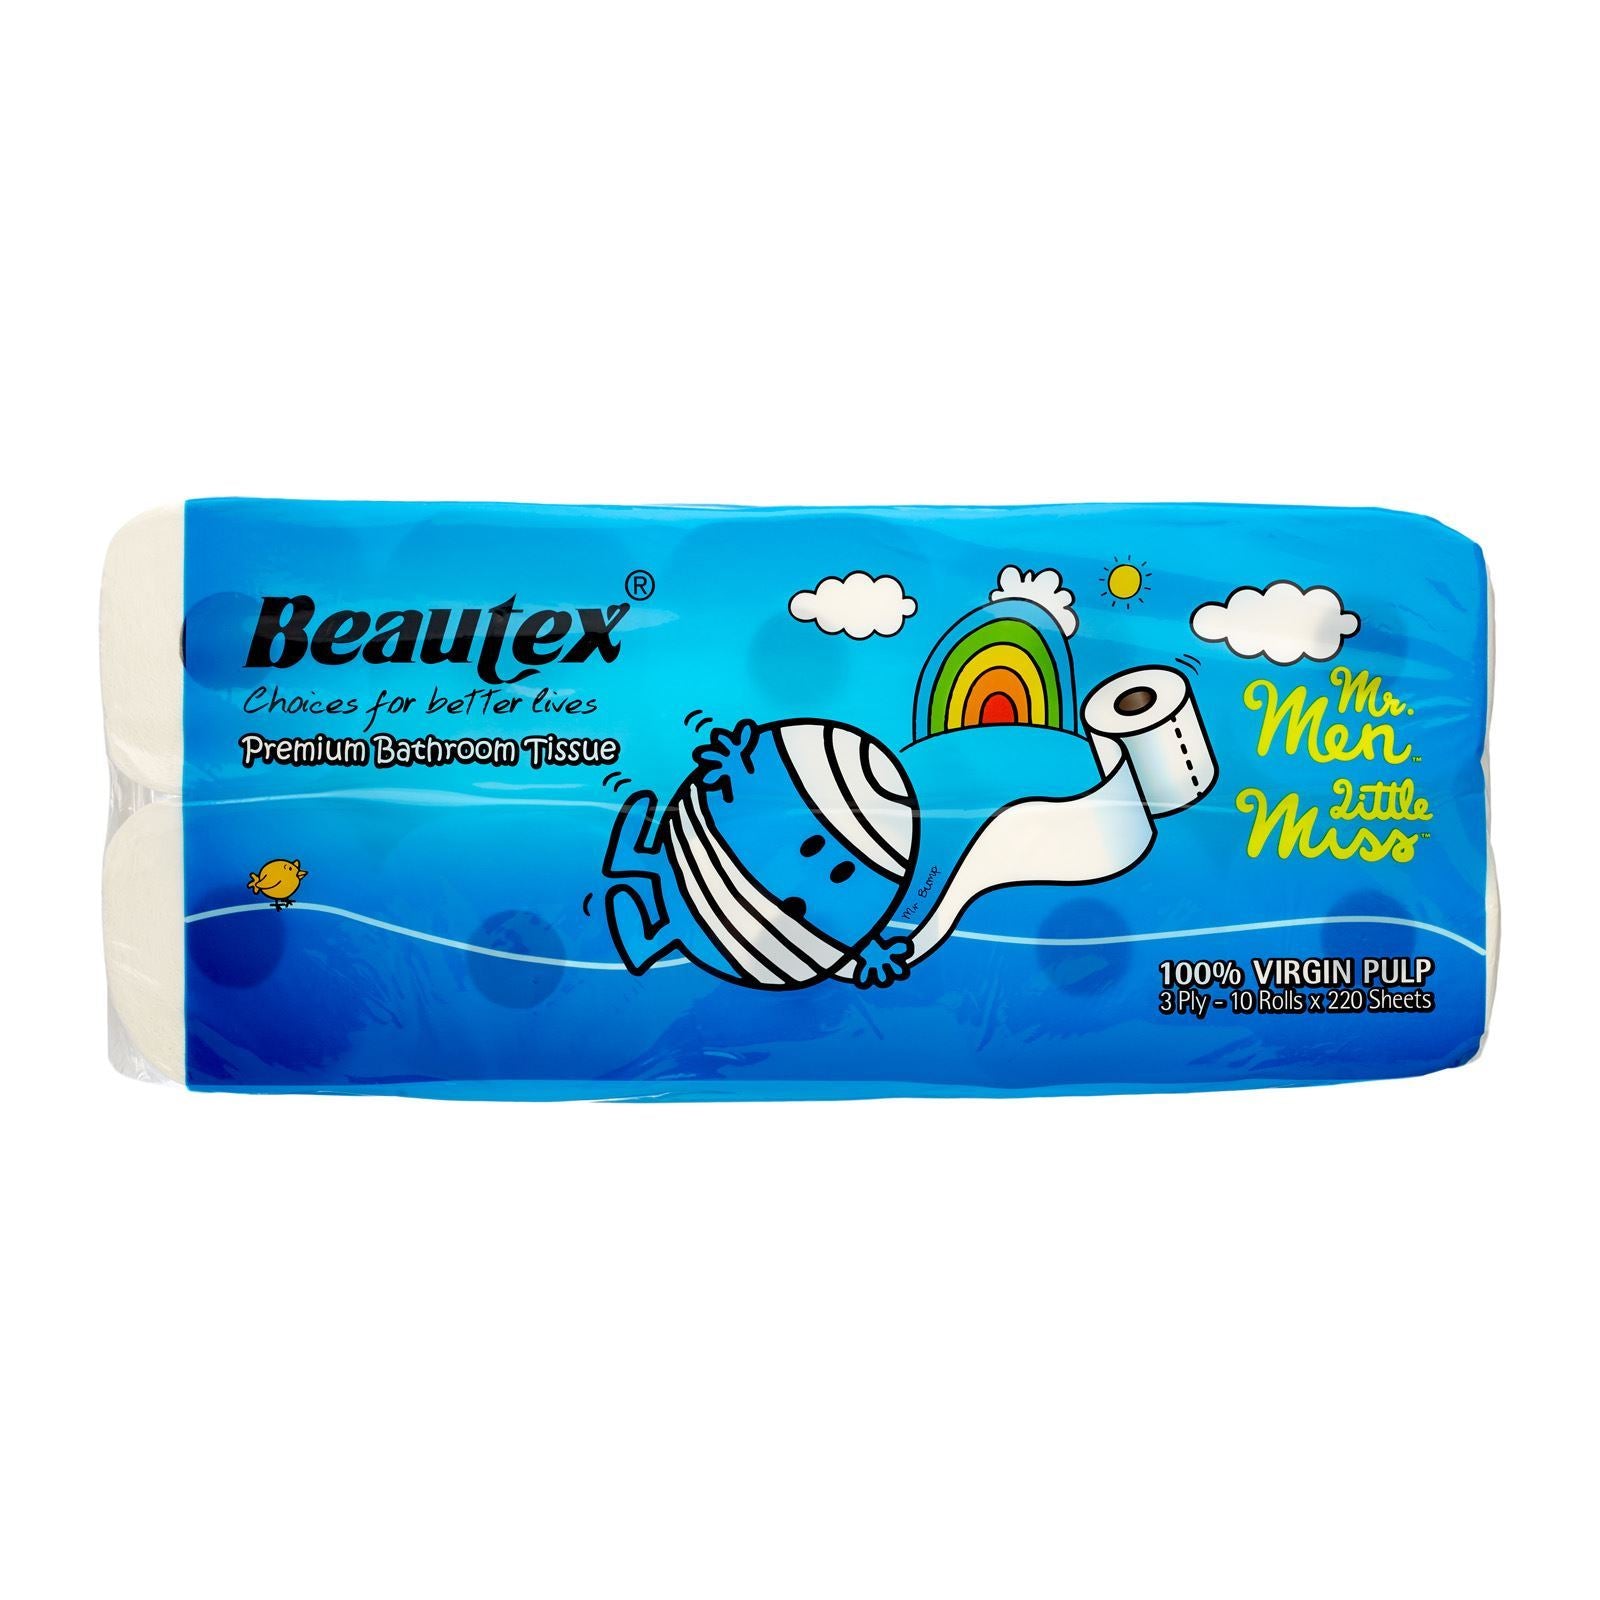 BEAUTEX Mr Men & Little Miss Pure Pulp 3 Ply Bathroom/Toilet Tissue Rolls